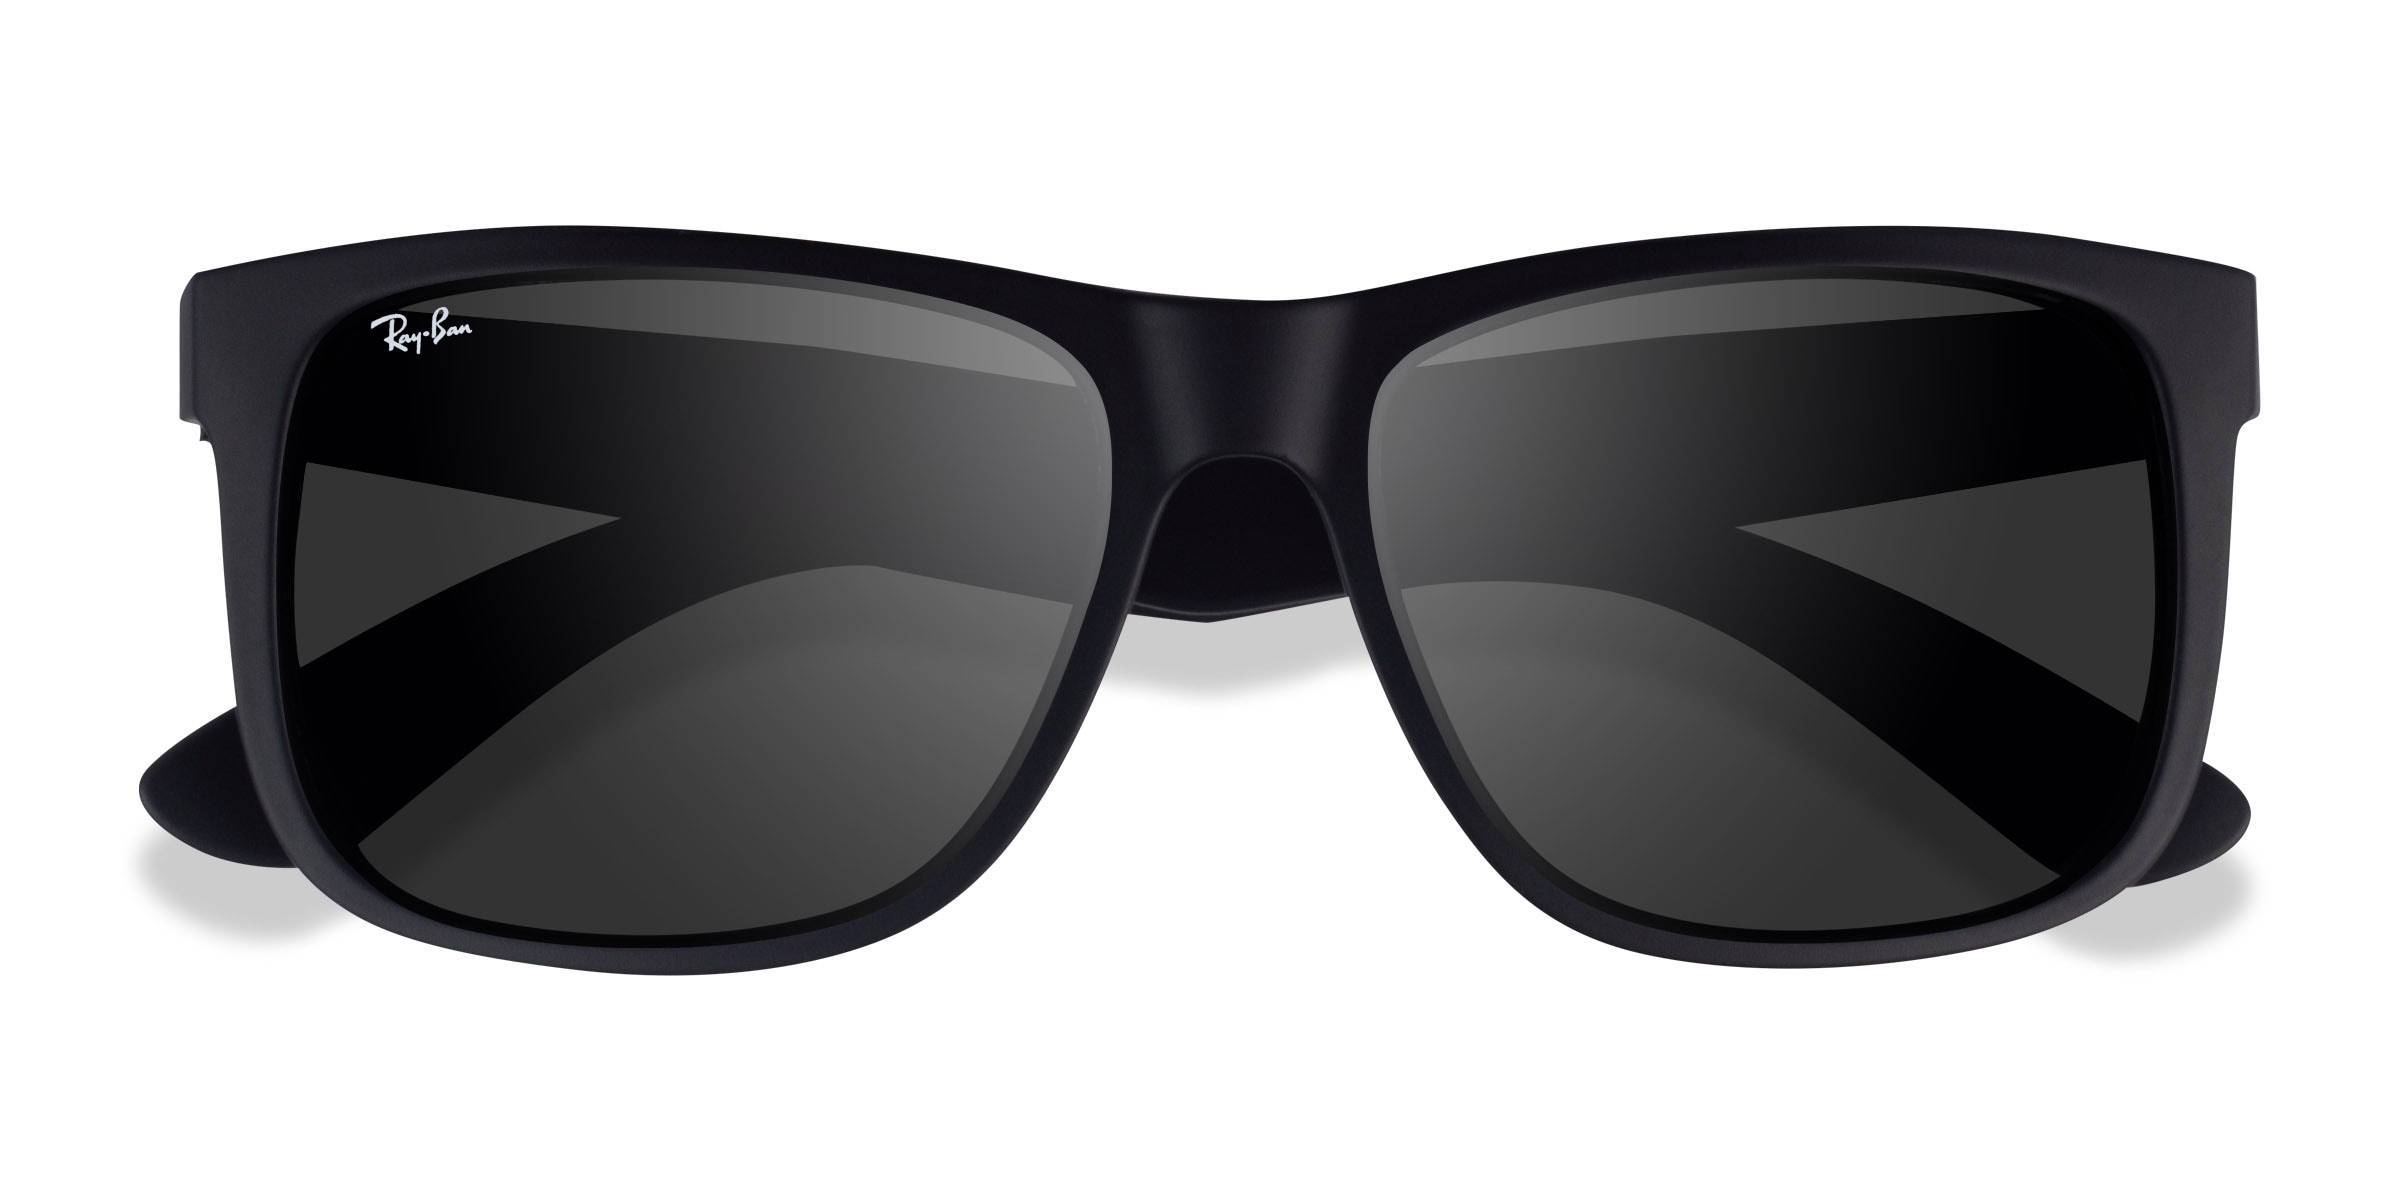 Ray-Ban RB 3273 006 Matte Black Rectangular Sunglasses G-15 Green 57-17  Italy | eBay